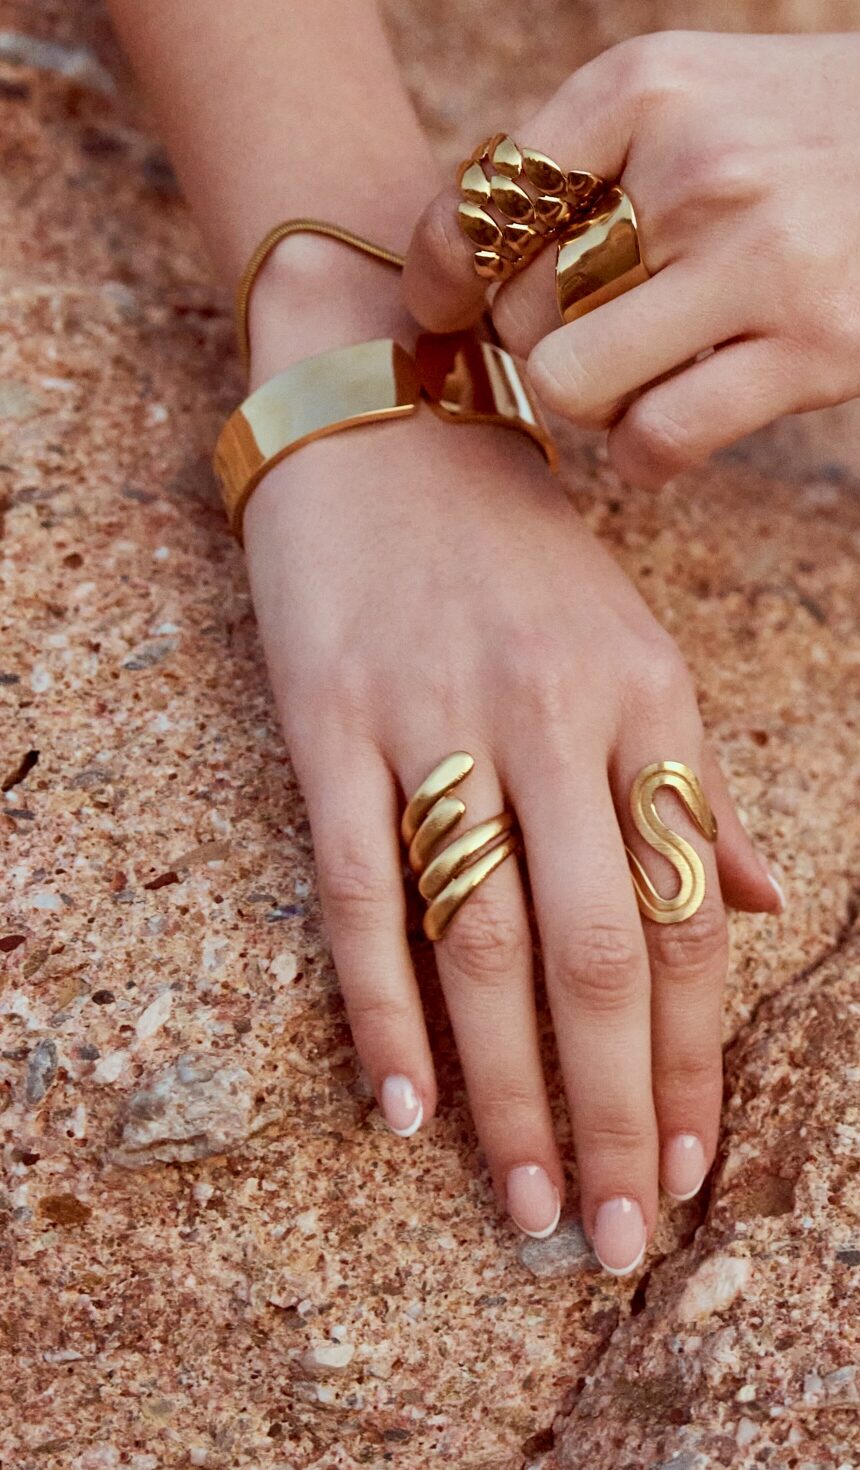 lyxnari bijoux rings collection δαχτυλίδια ατσάλι ατσάλινα δαχτυλίδια ατσάλινα κοσμήματα γυναικεία κοσμήματα γυναικεία δαχτυλίδια